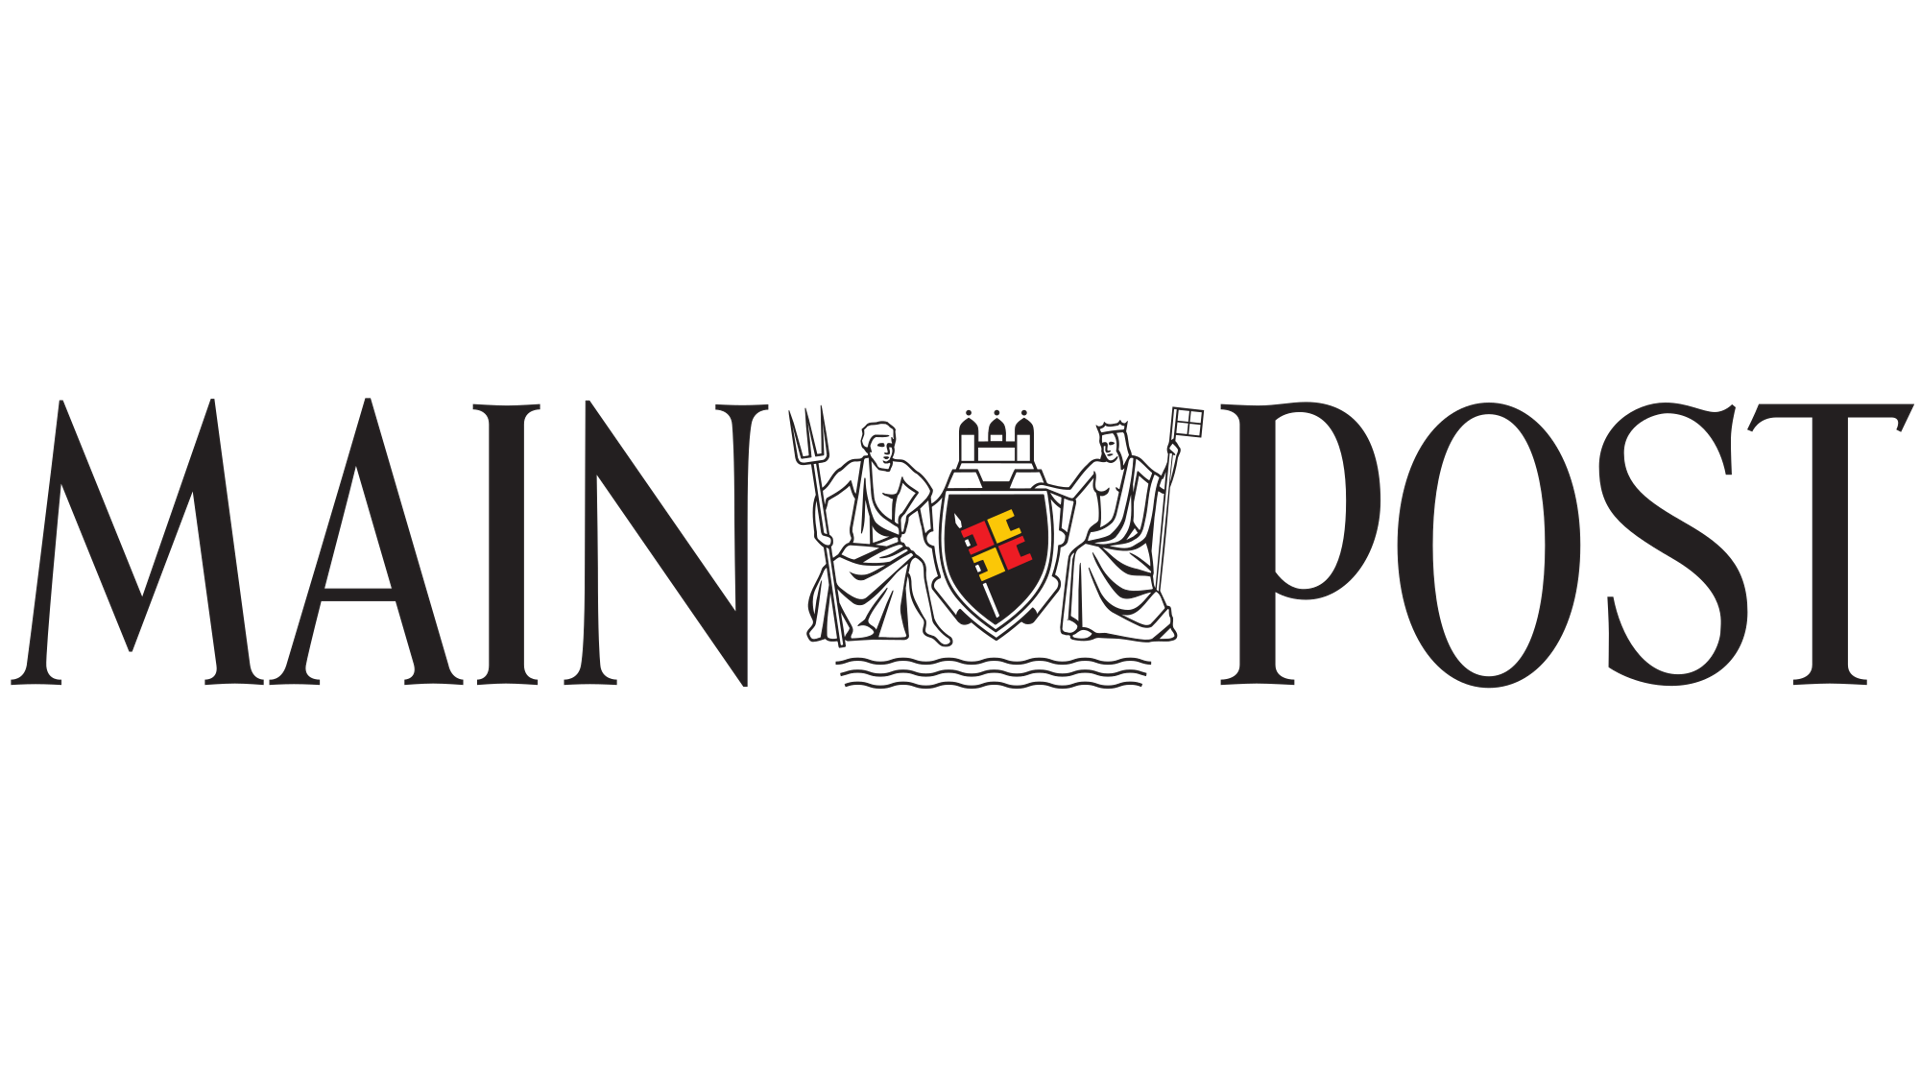 Main-Post Logo